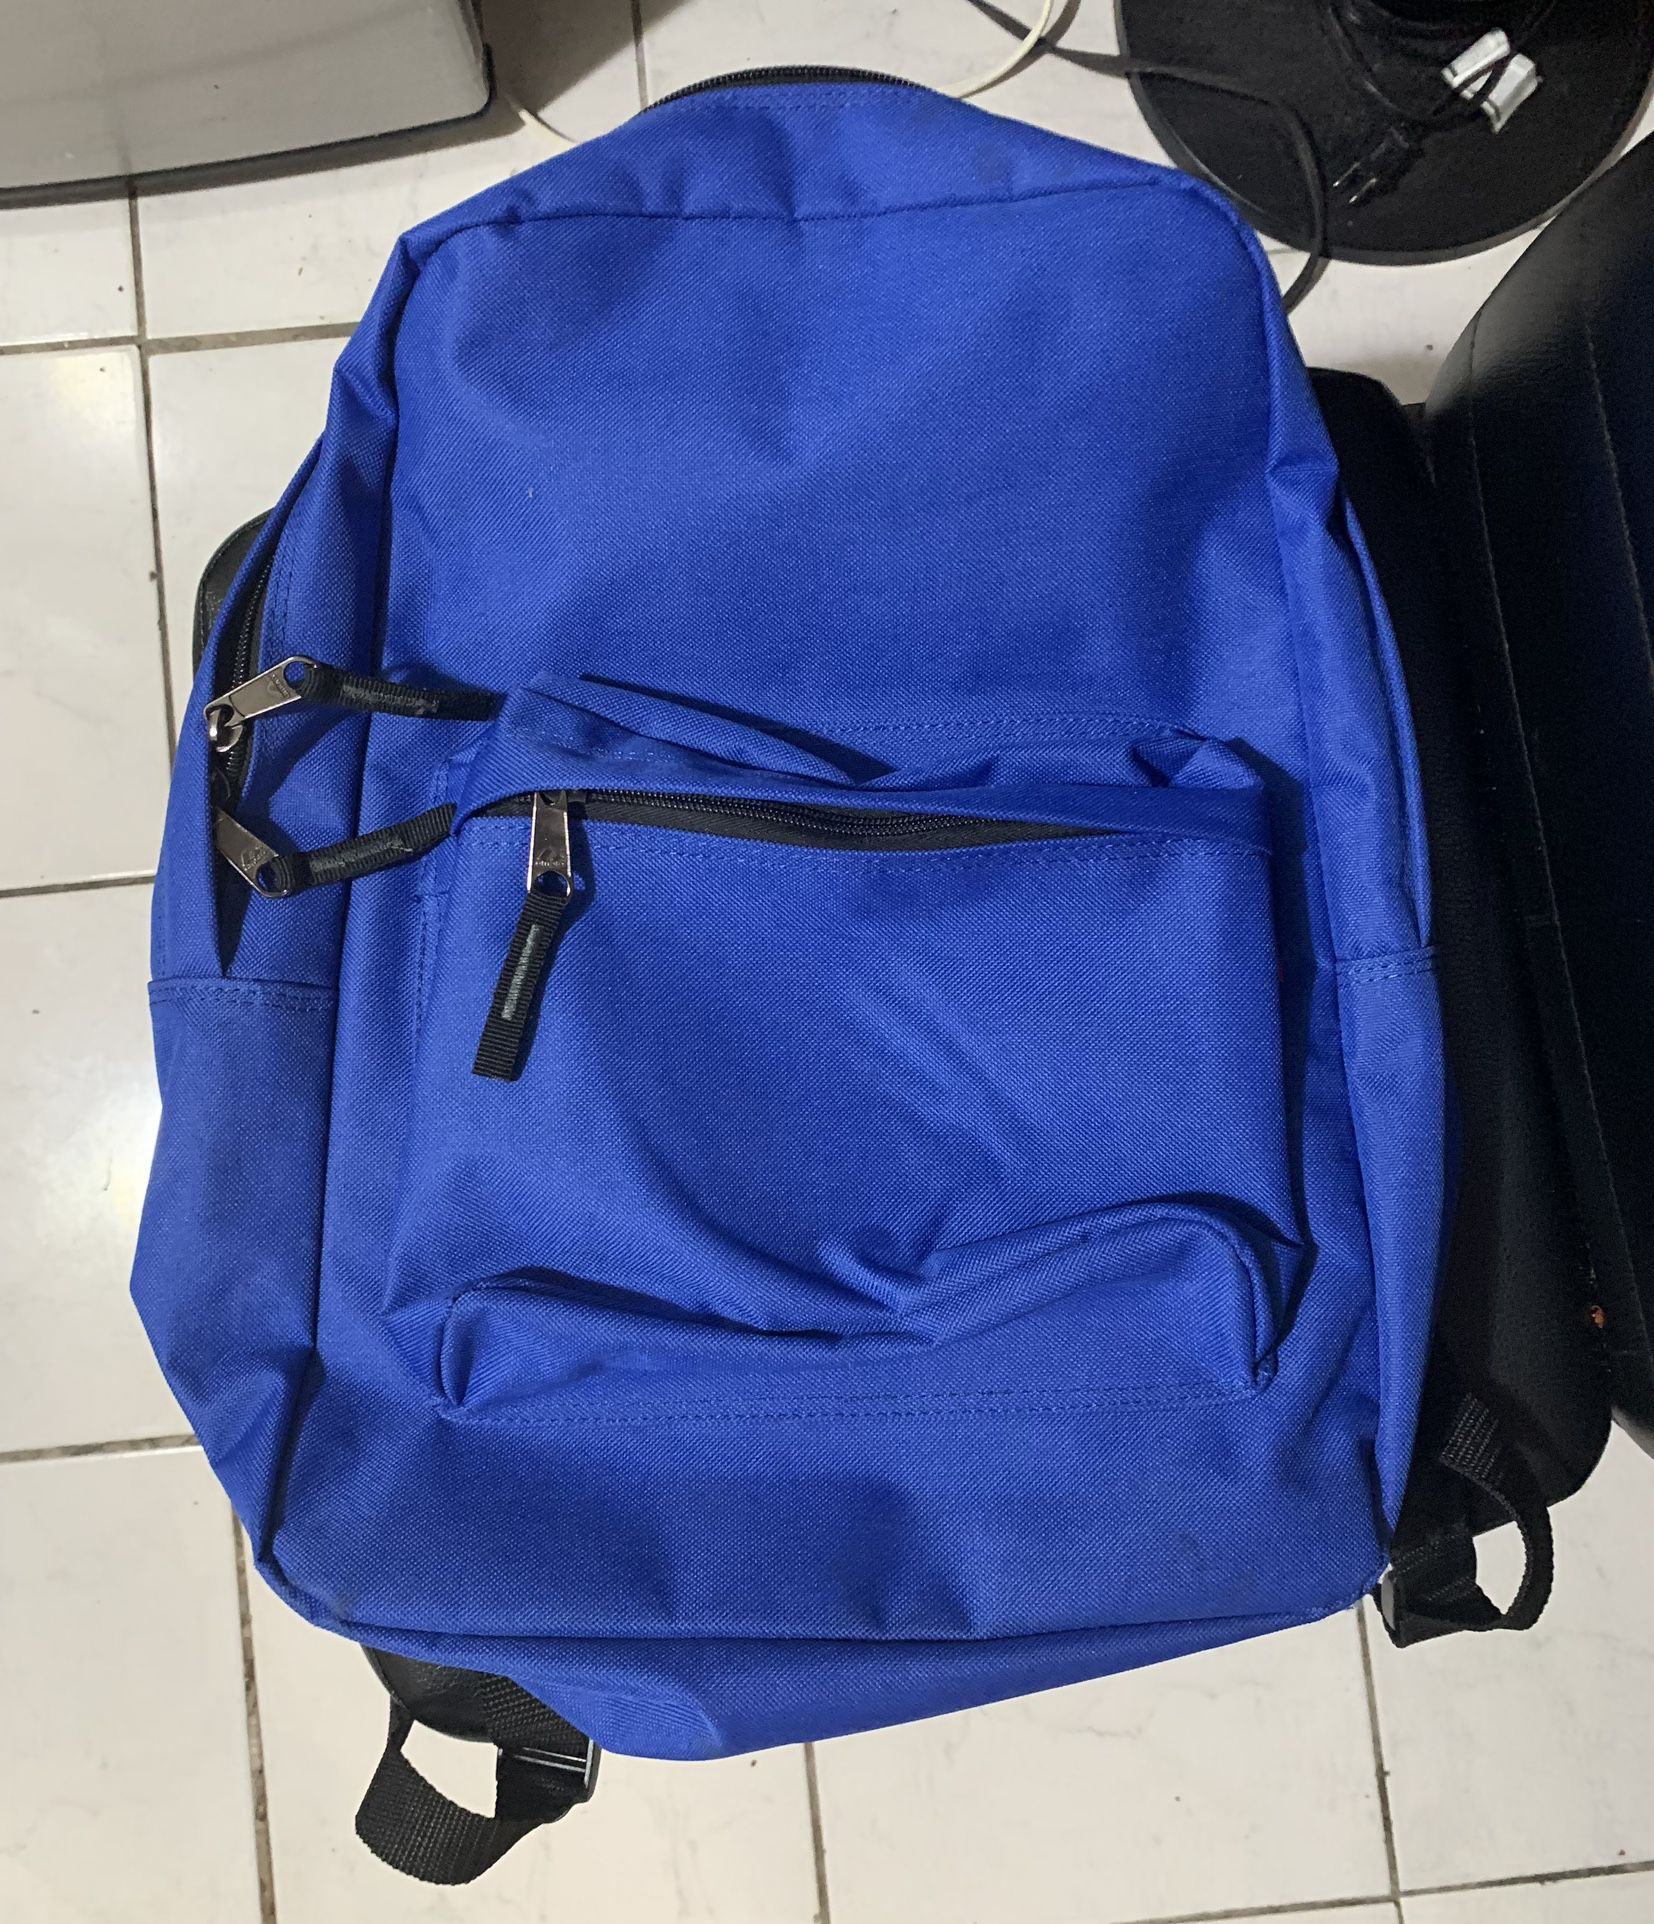 Amaro backpack